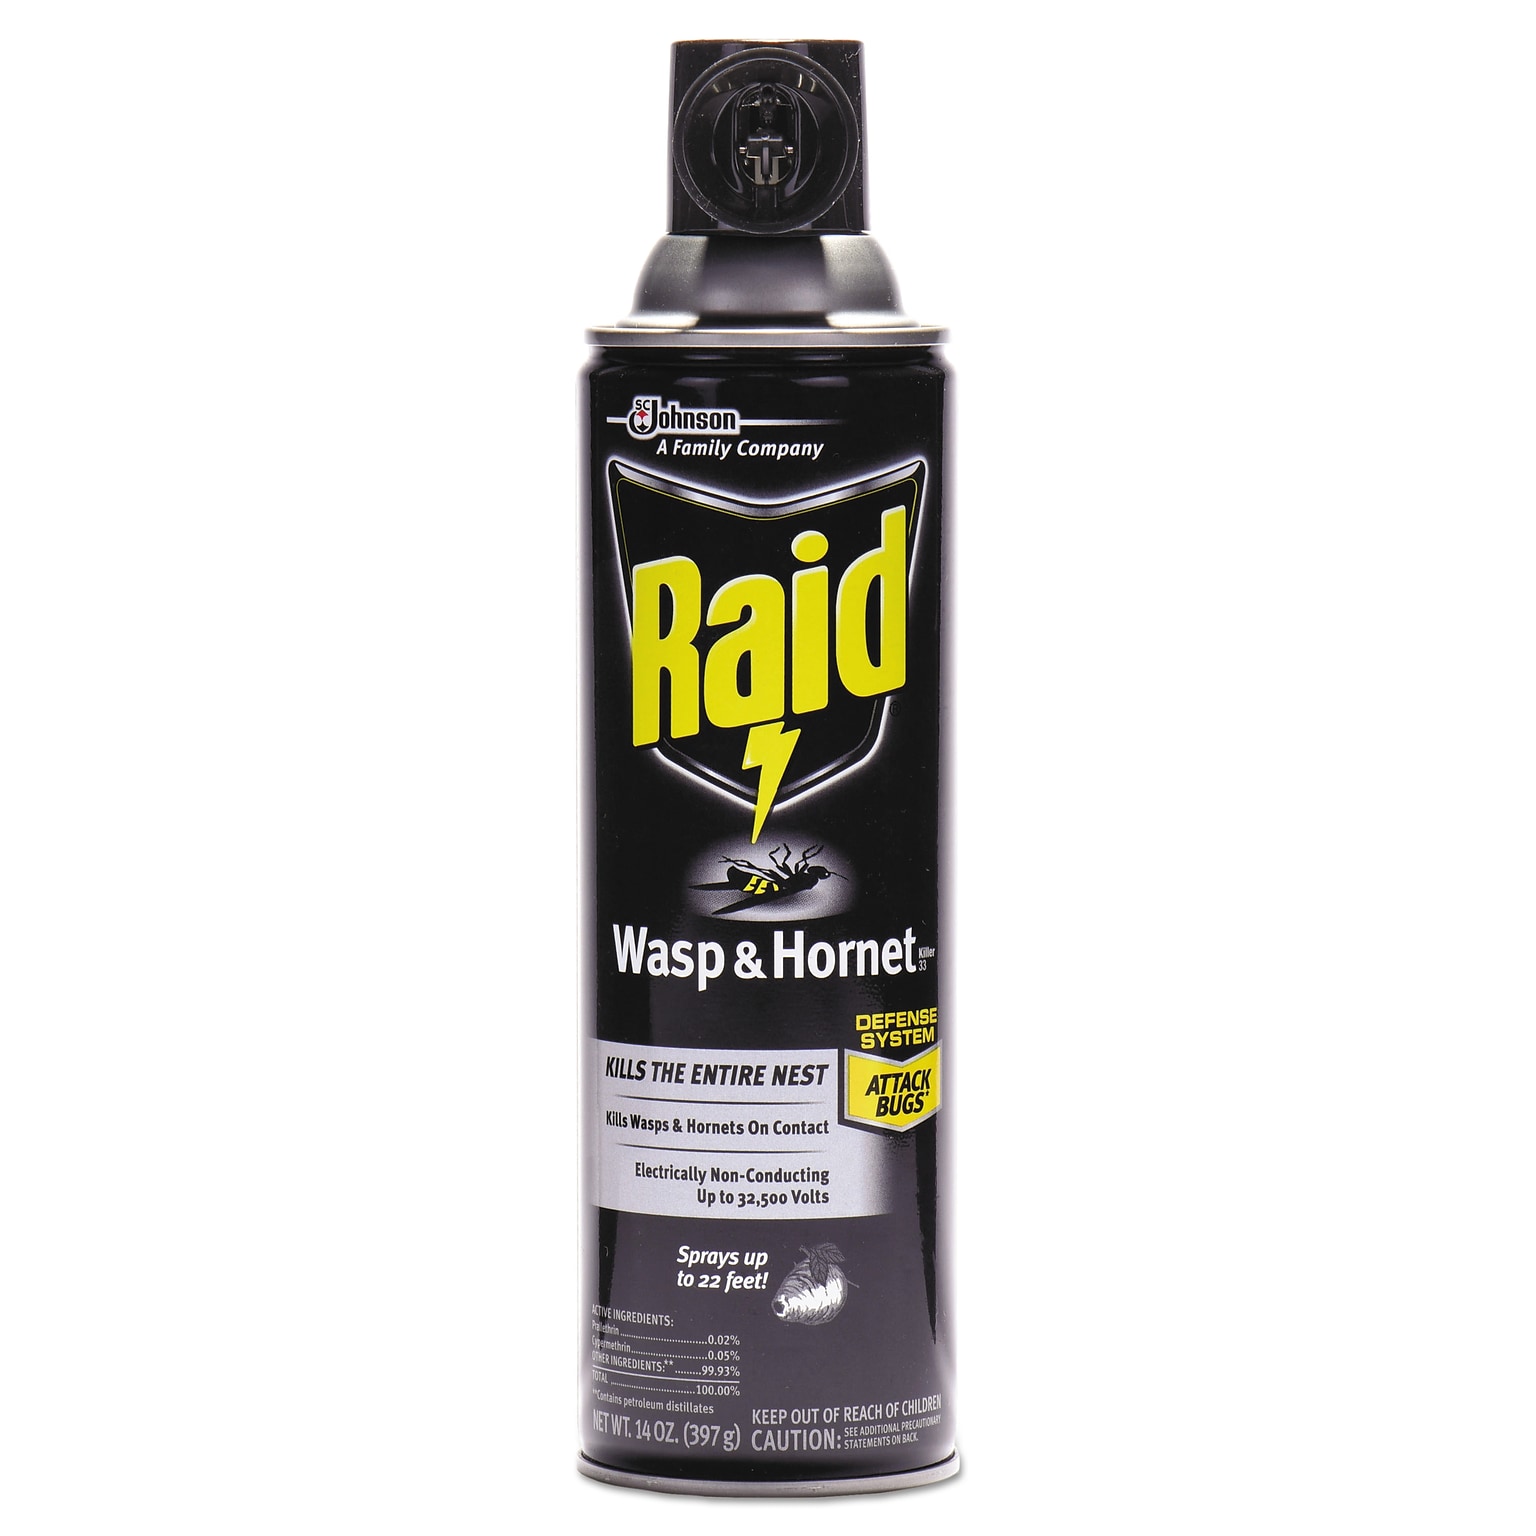 Raid Wasp and Hornet Killer, 14 oz. Aerosol Spray, 12/Carton (SJN668006)